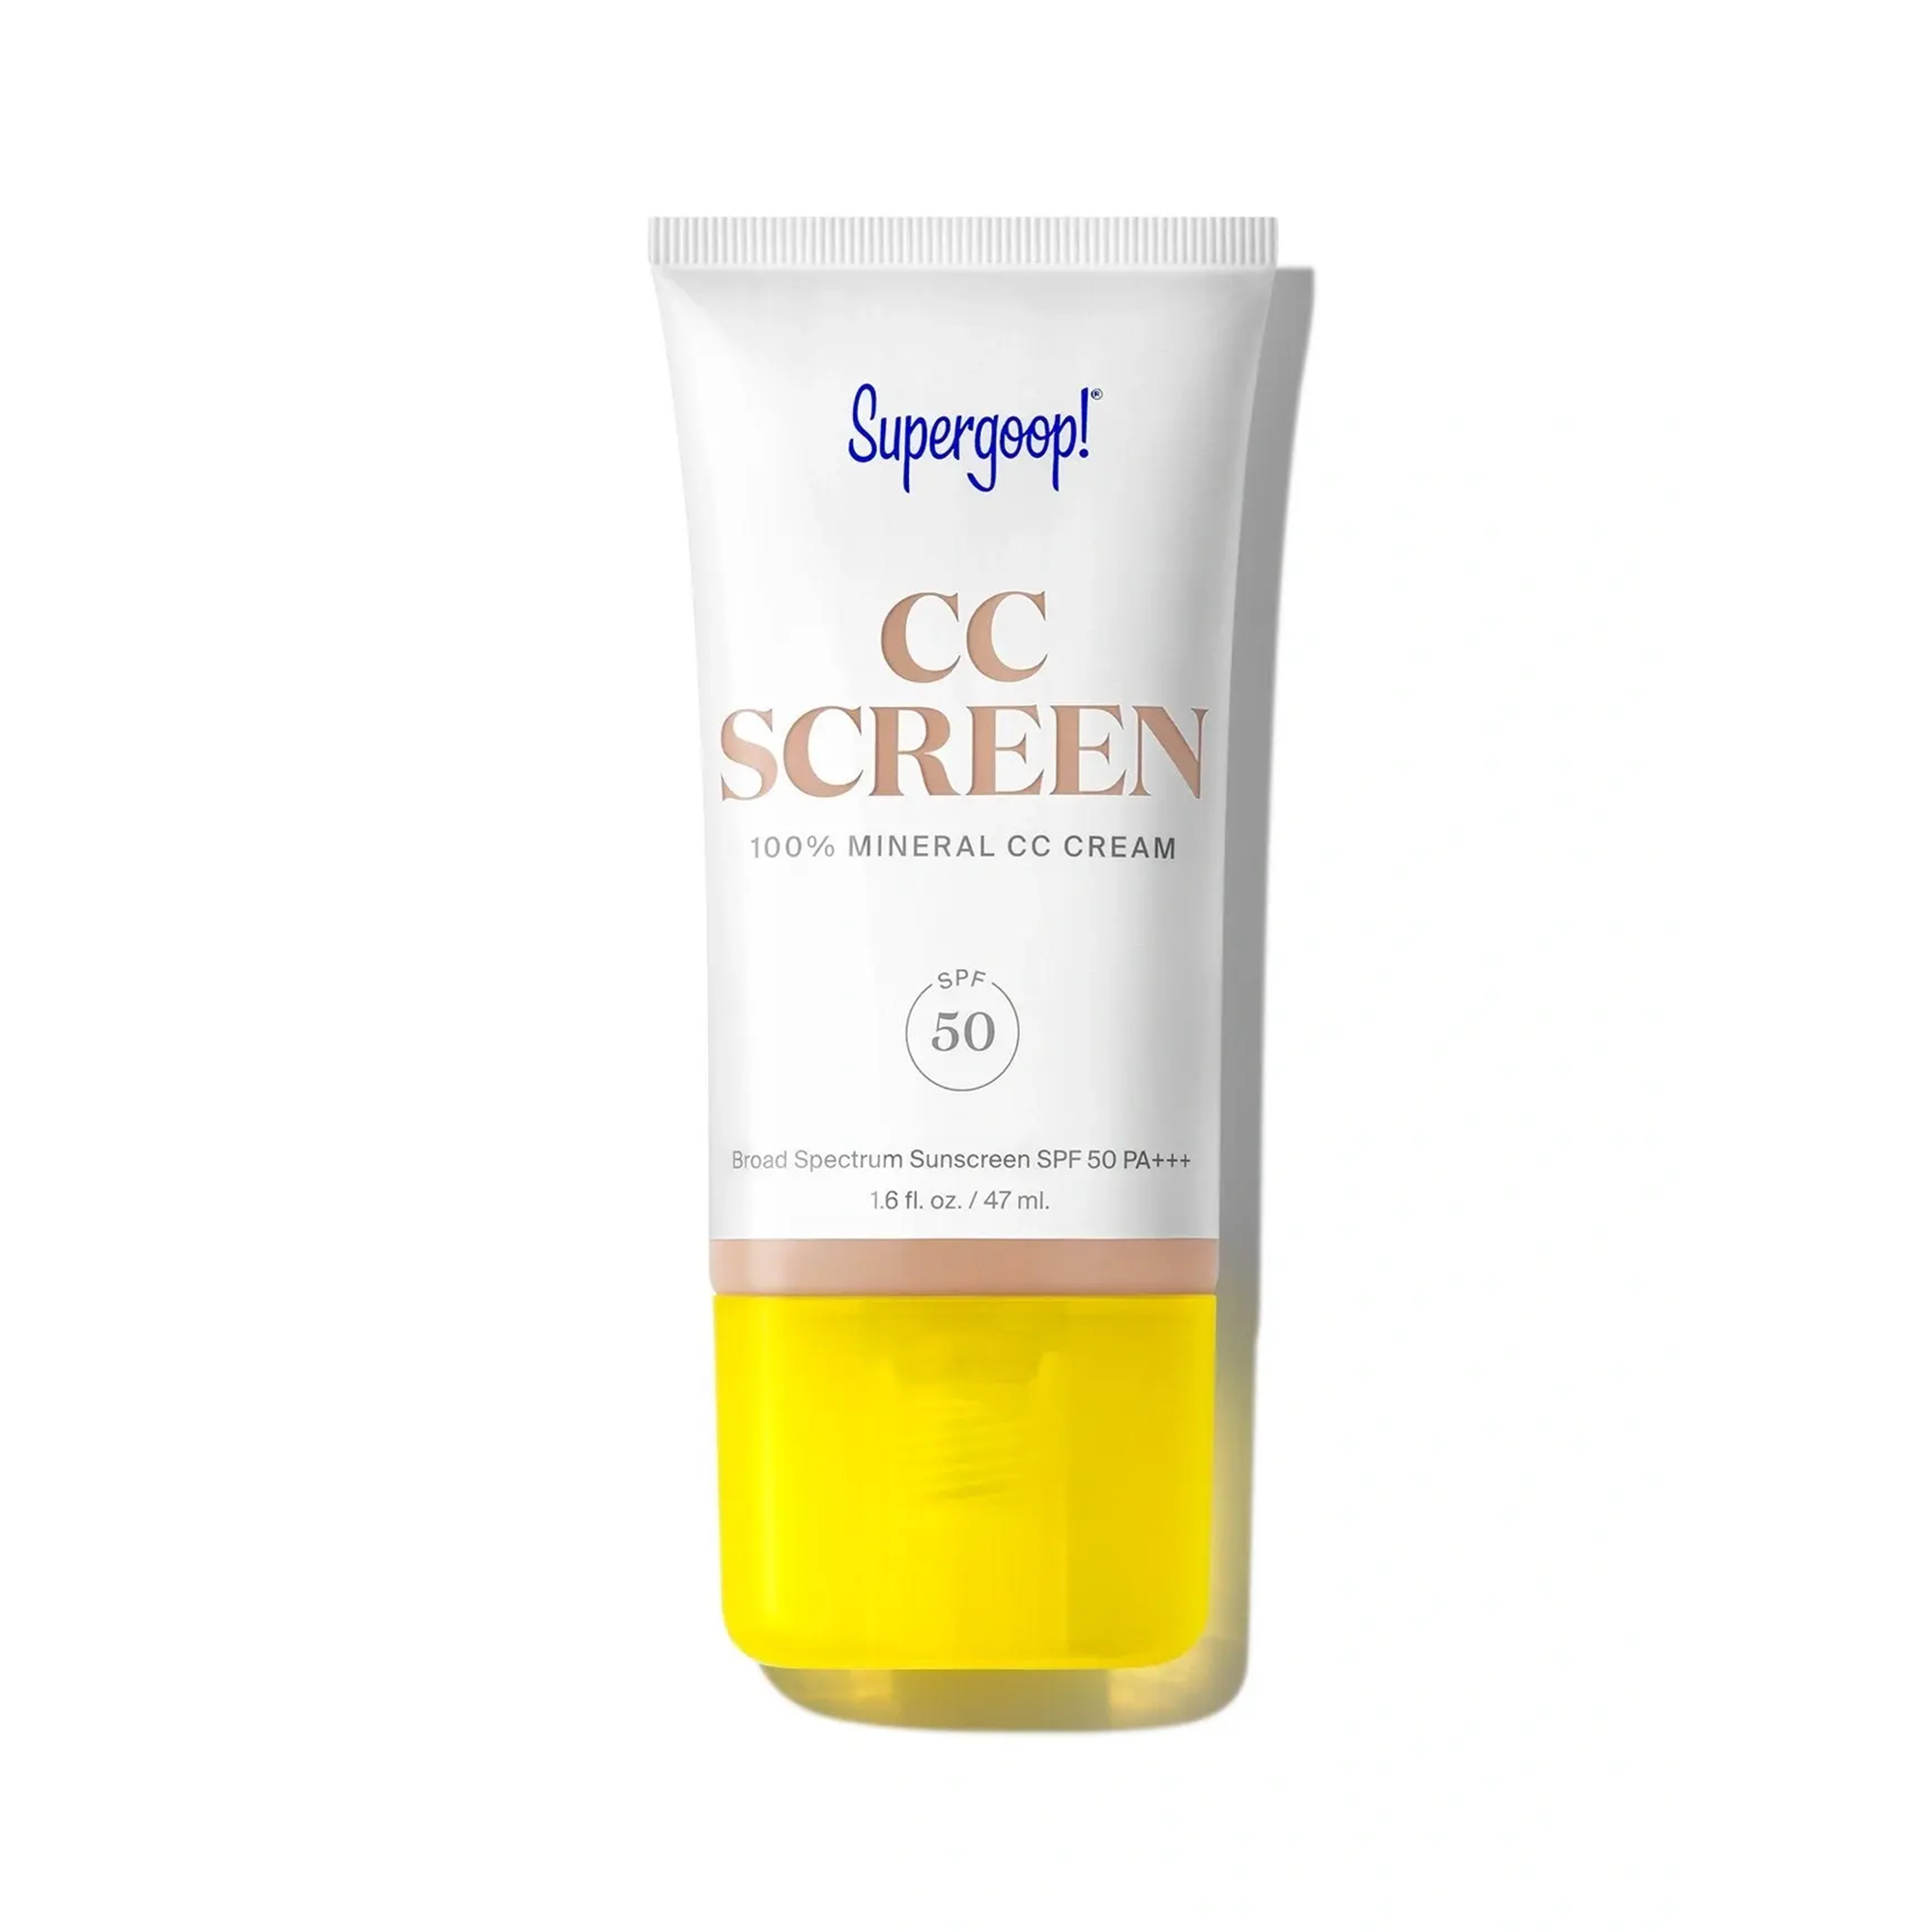 Supergoop! CC Screen 100% Mineral CC Cream SPF 50 / 206W